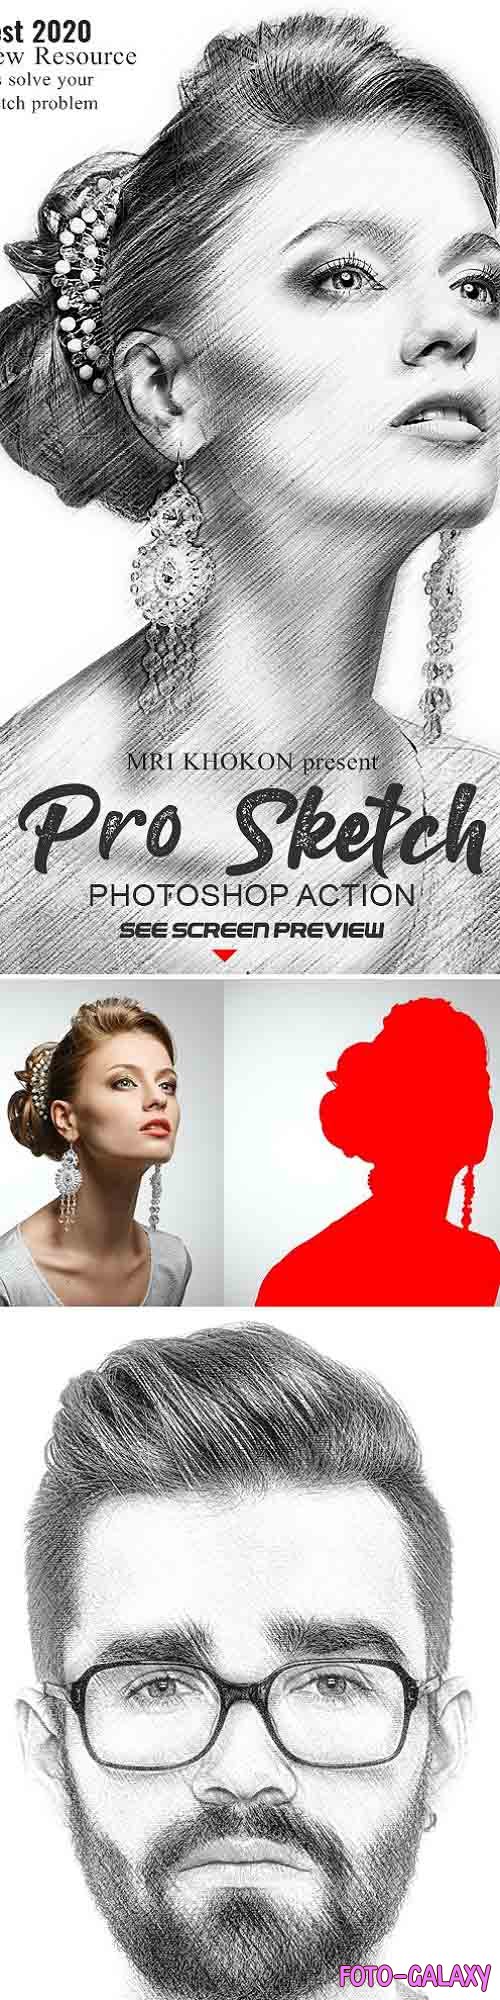 Pro Sketch Photoshop Action 26522055